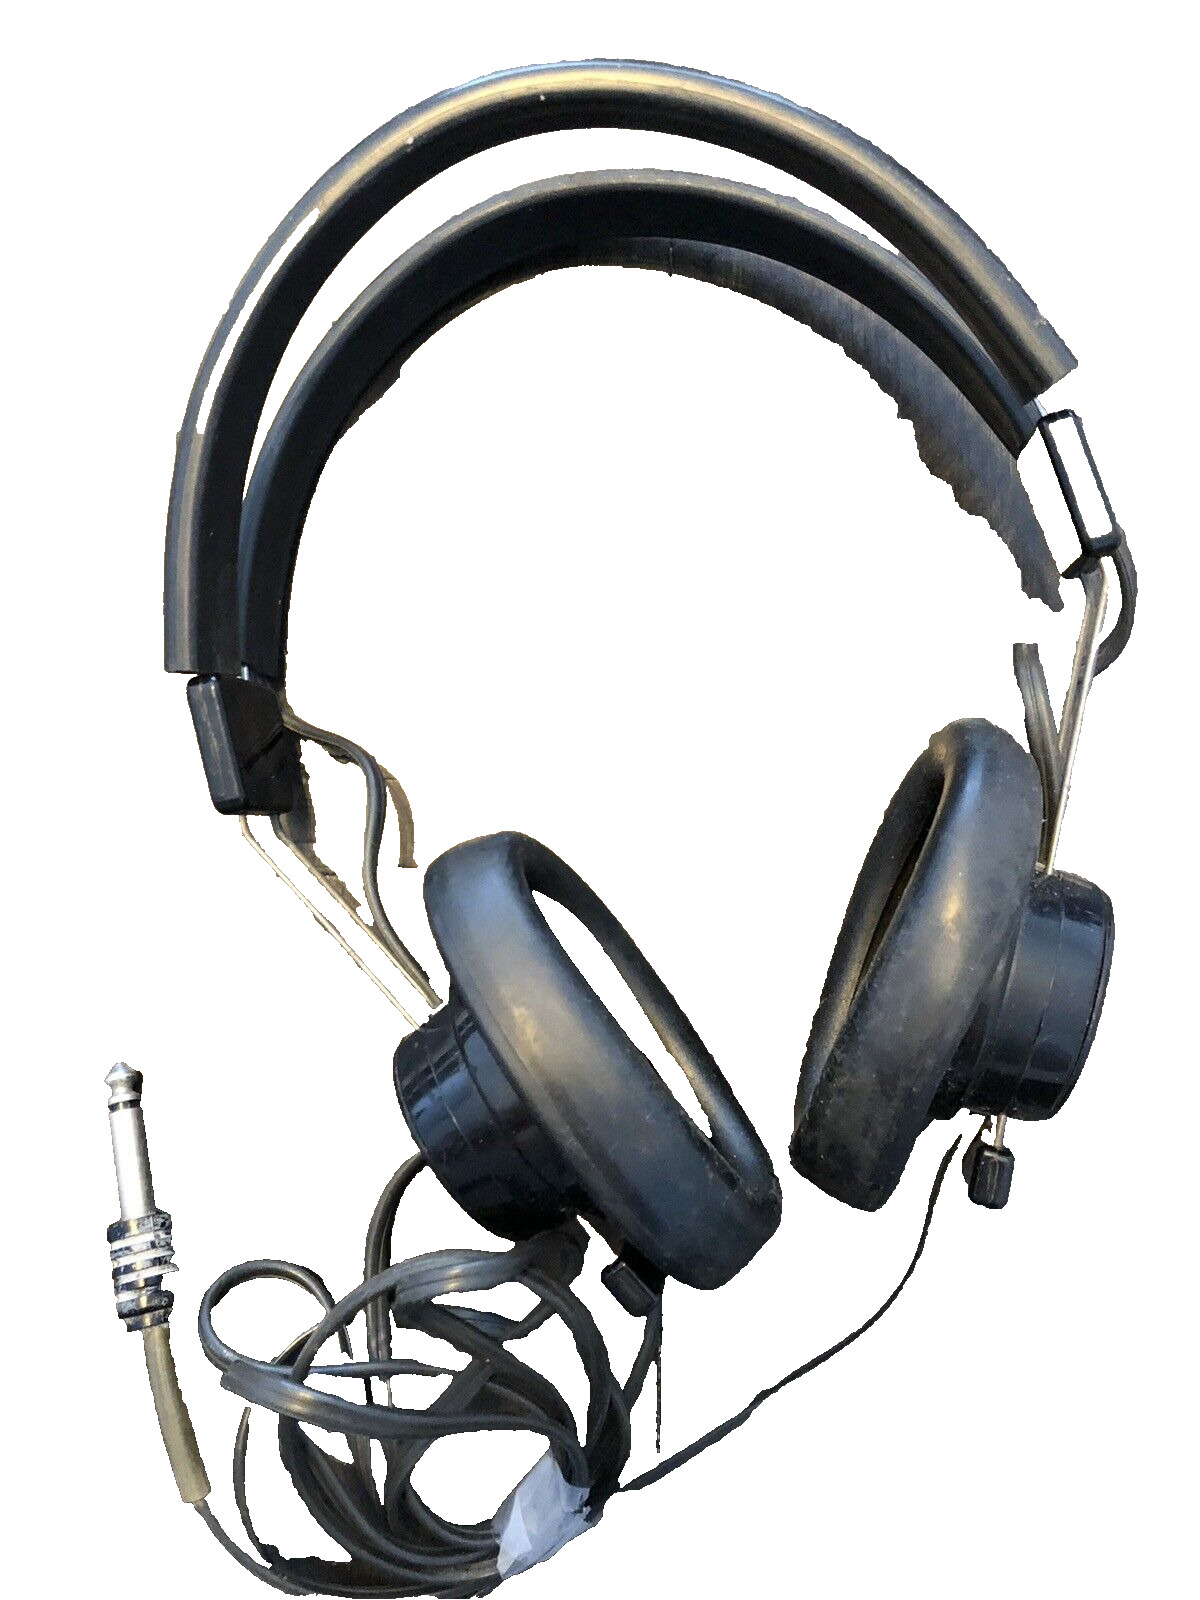 Telex Aviation Headset Piolet Headphones Untested Model A 610 Vintage